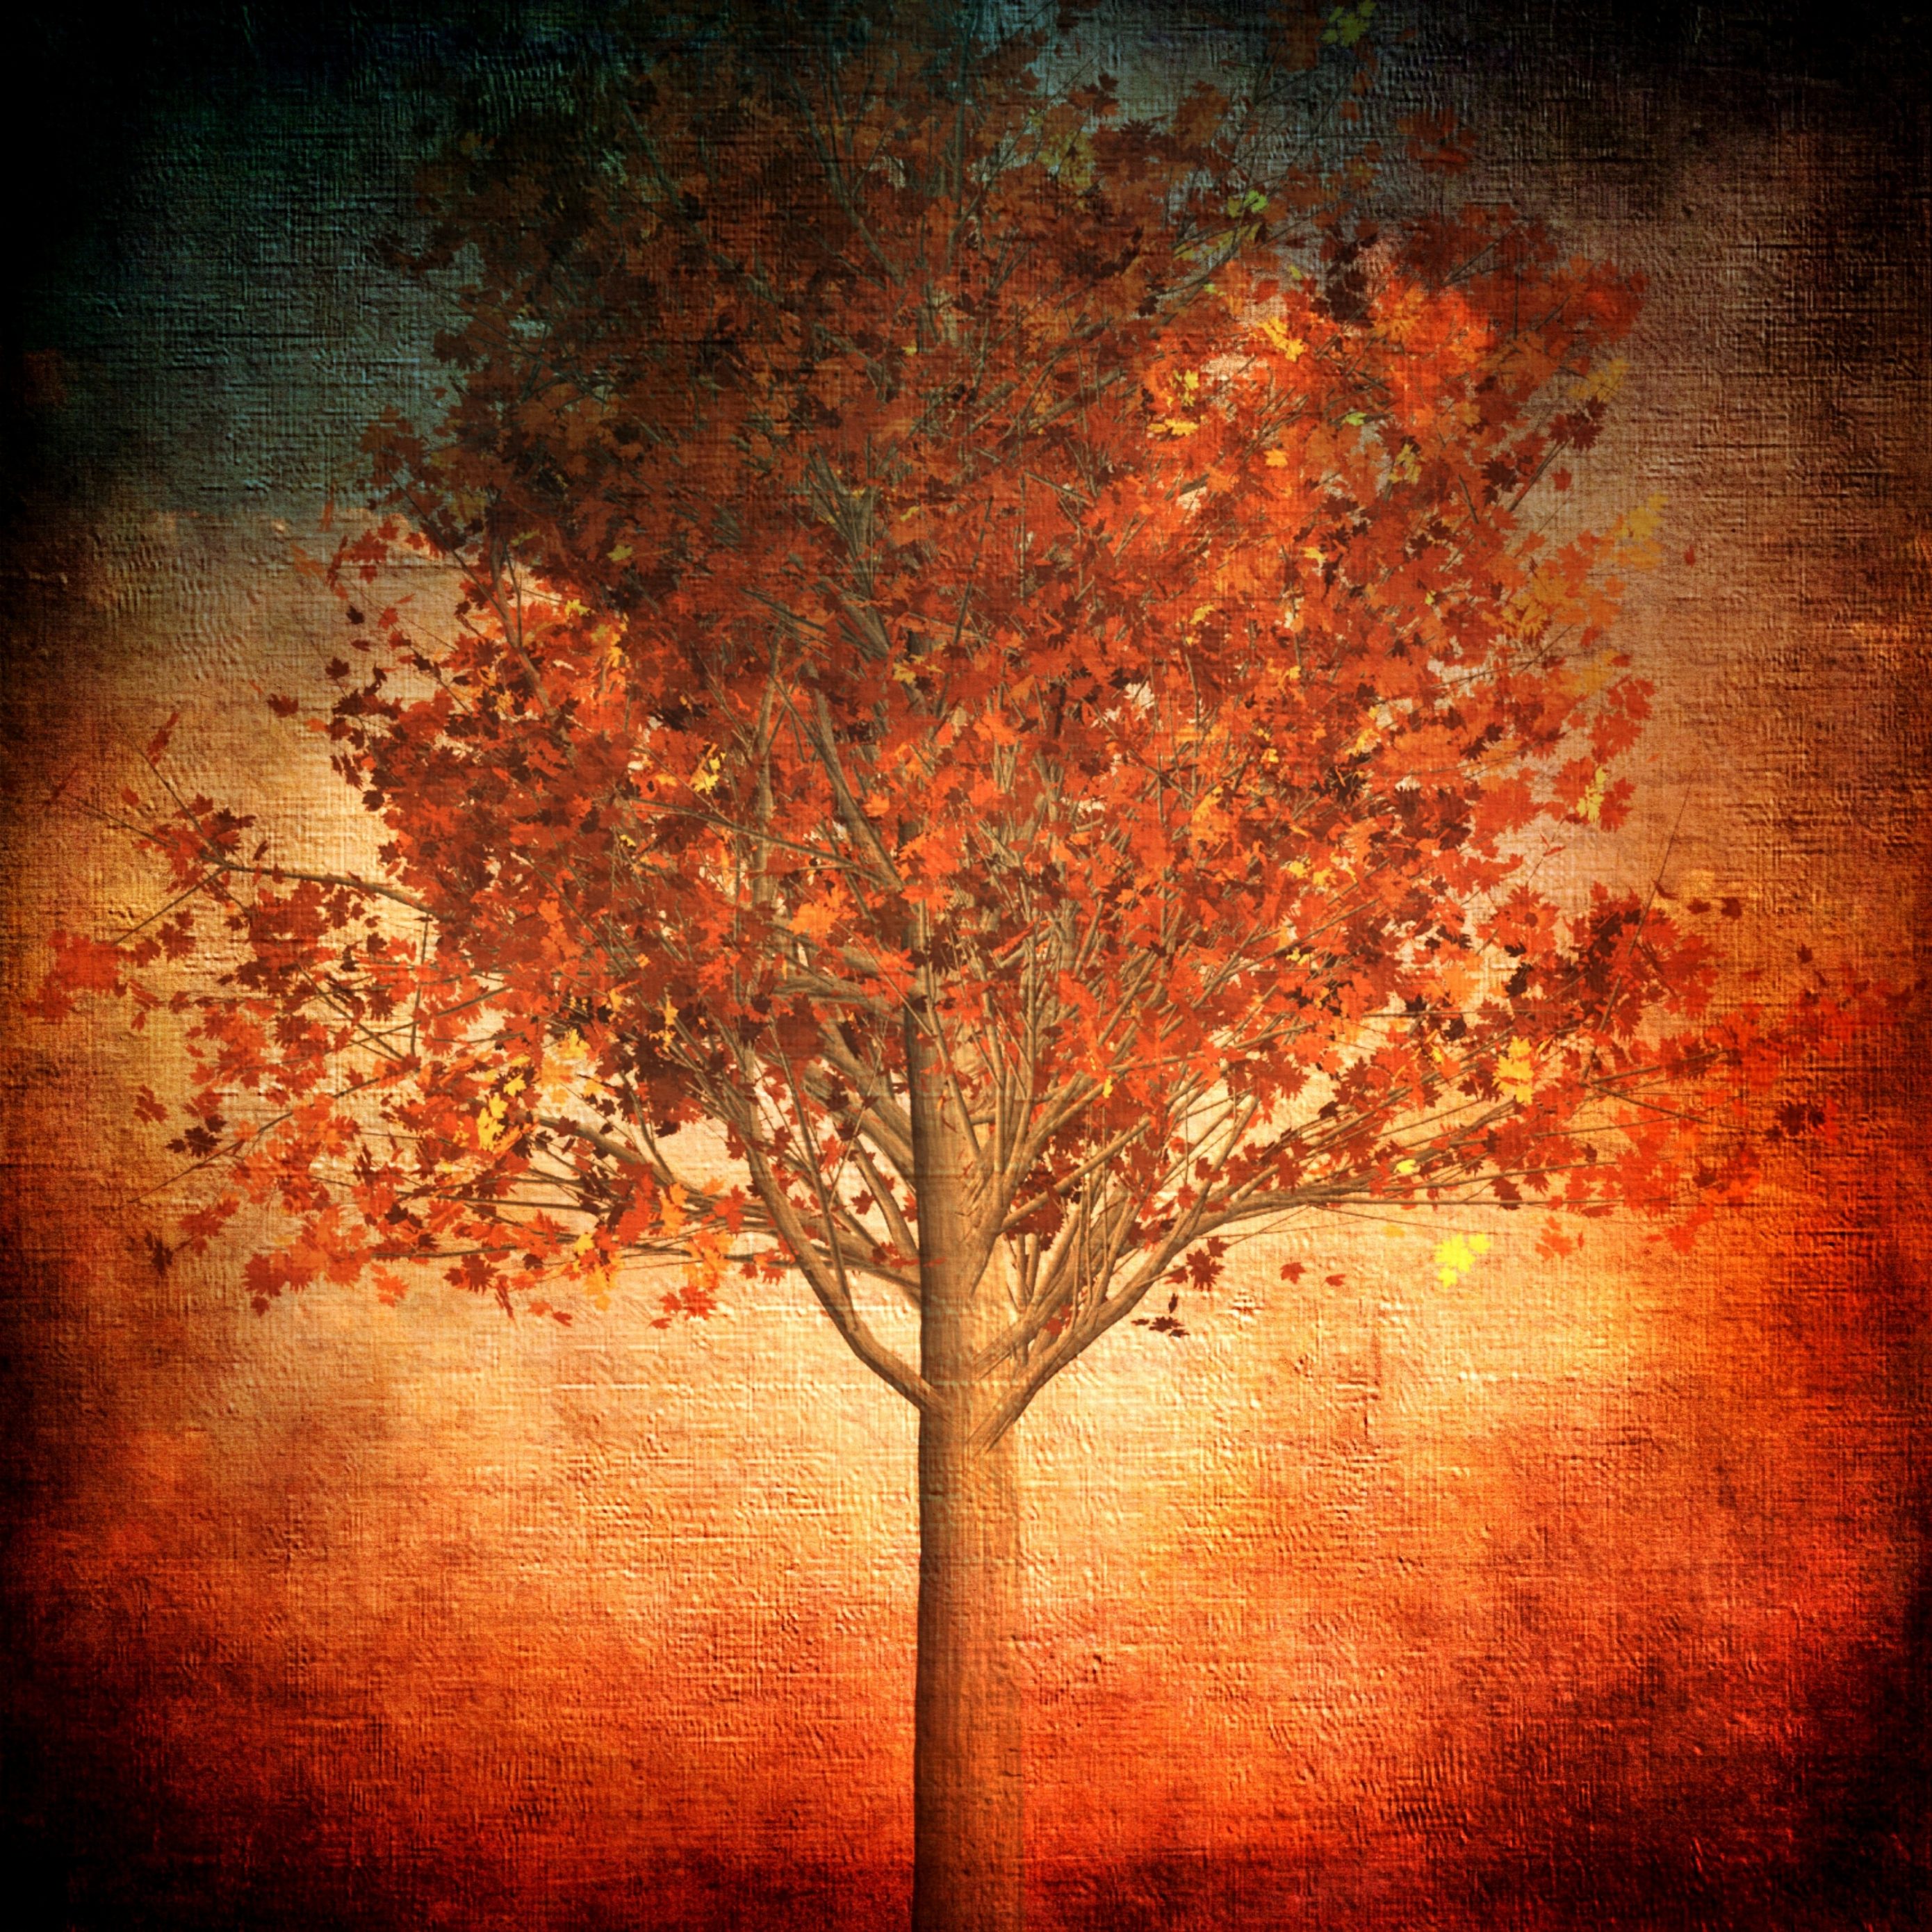 2780x2780 Parallax wallpaper 4k Aesthetic Autumn Red Fall Leaves Nature iPad Wallpaper 2780x2780 pixels resolution